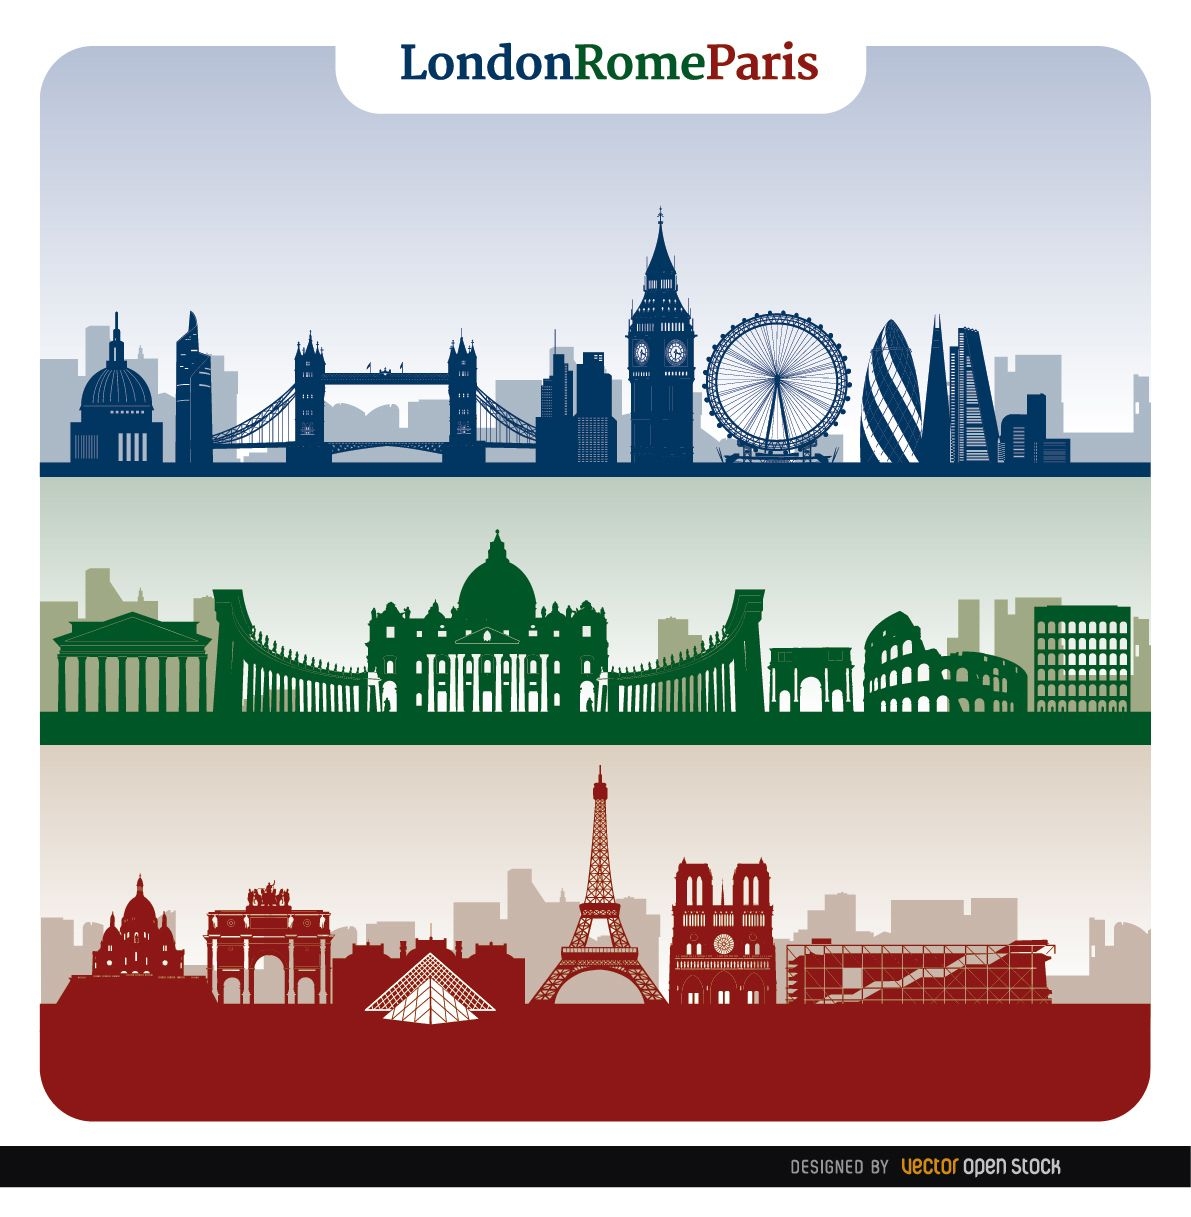 London Rome Paris skyline banners